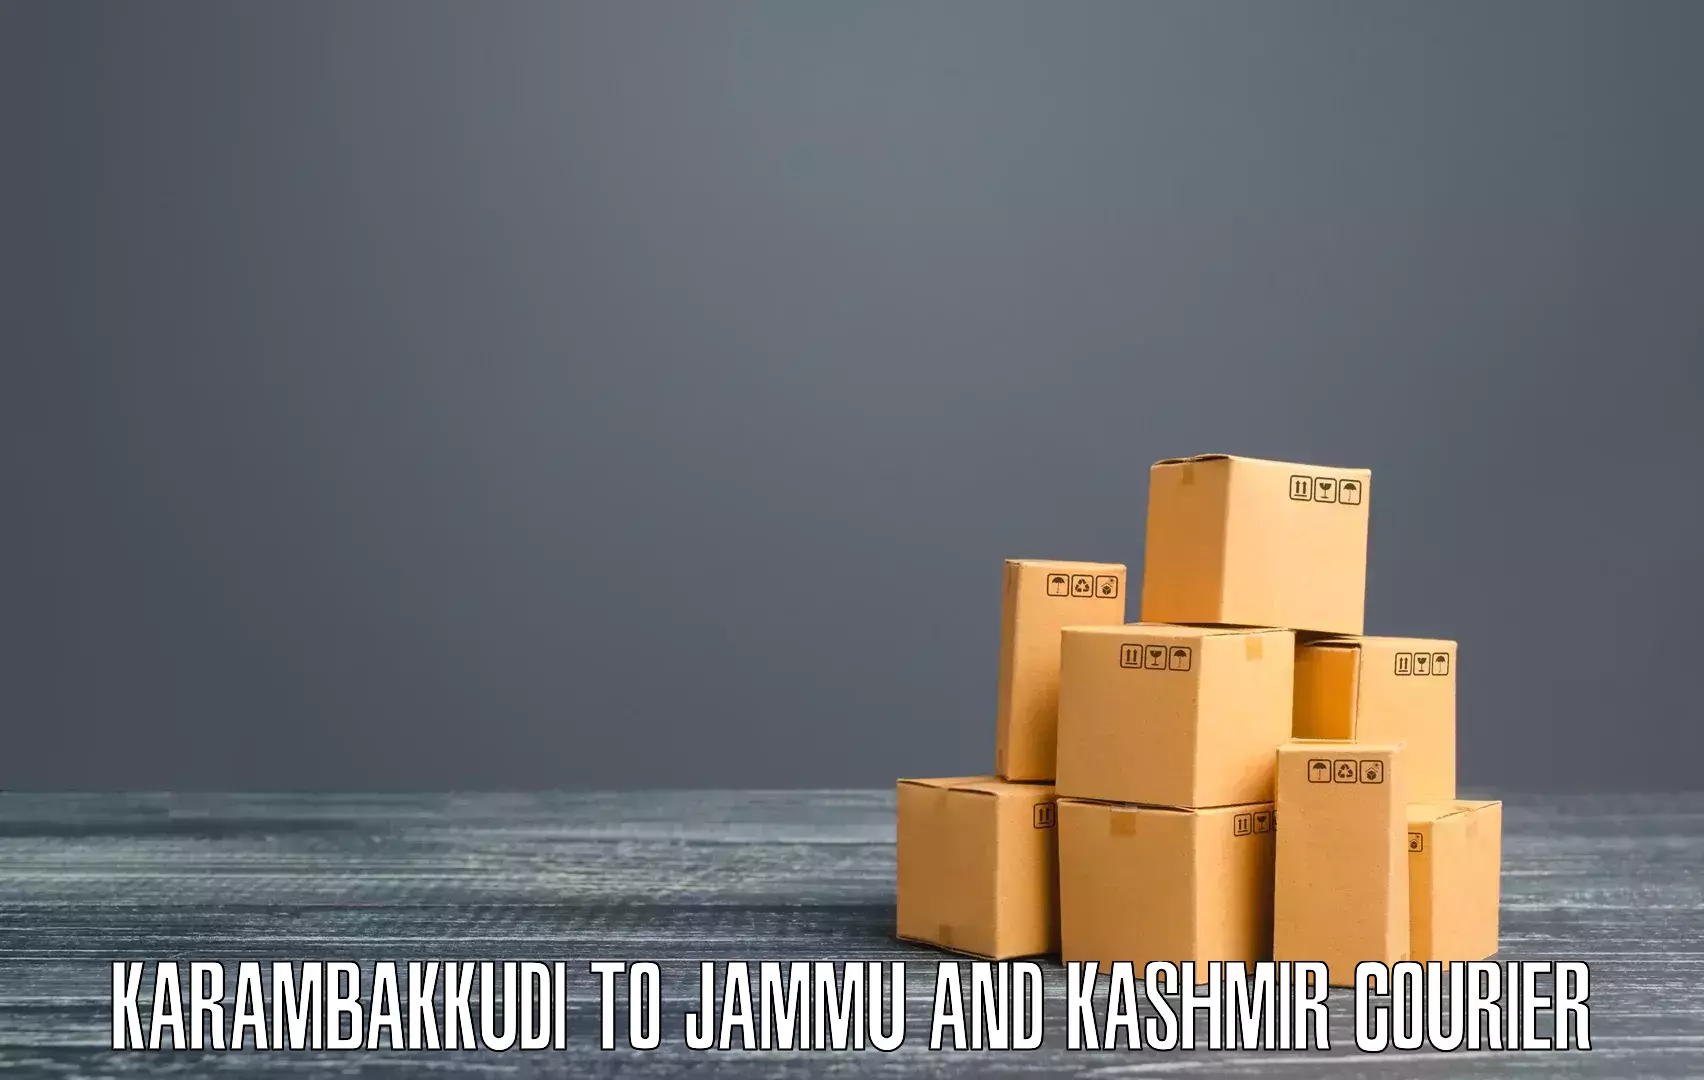 Courier rate comparison in Karambakkudi to Kargil